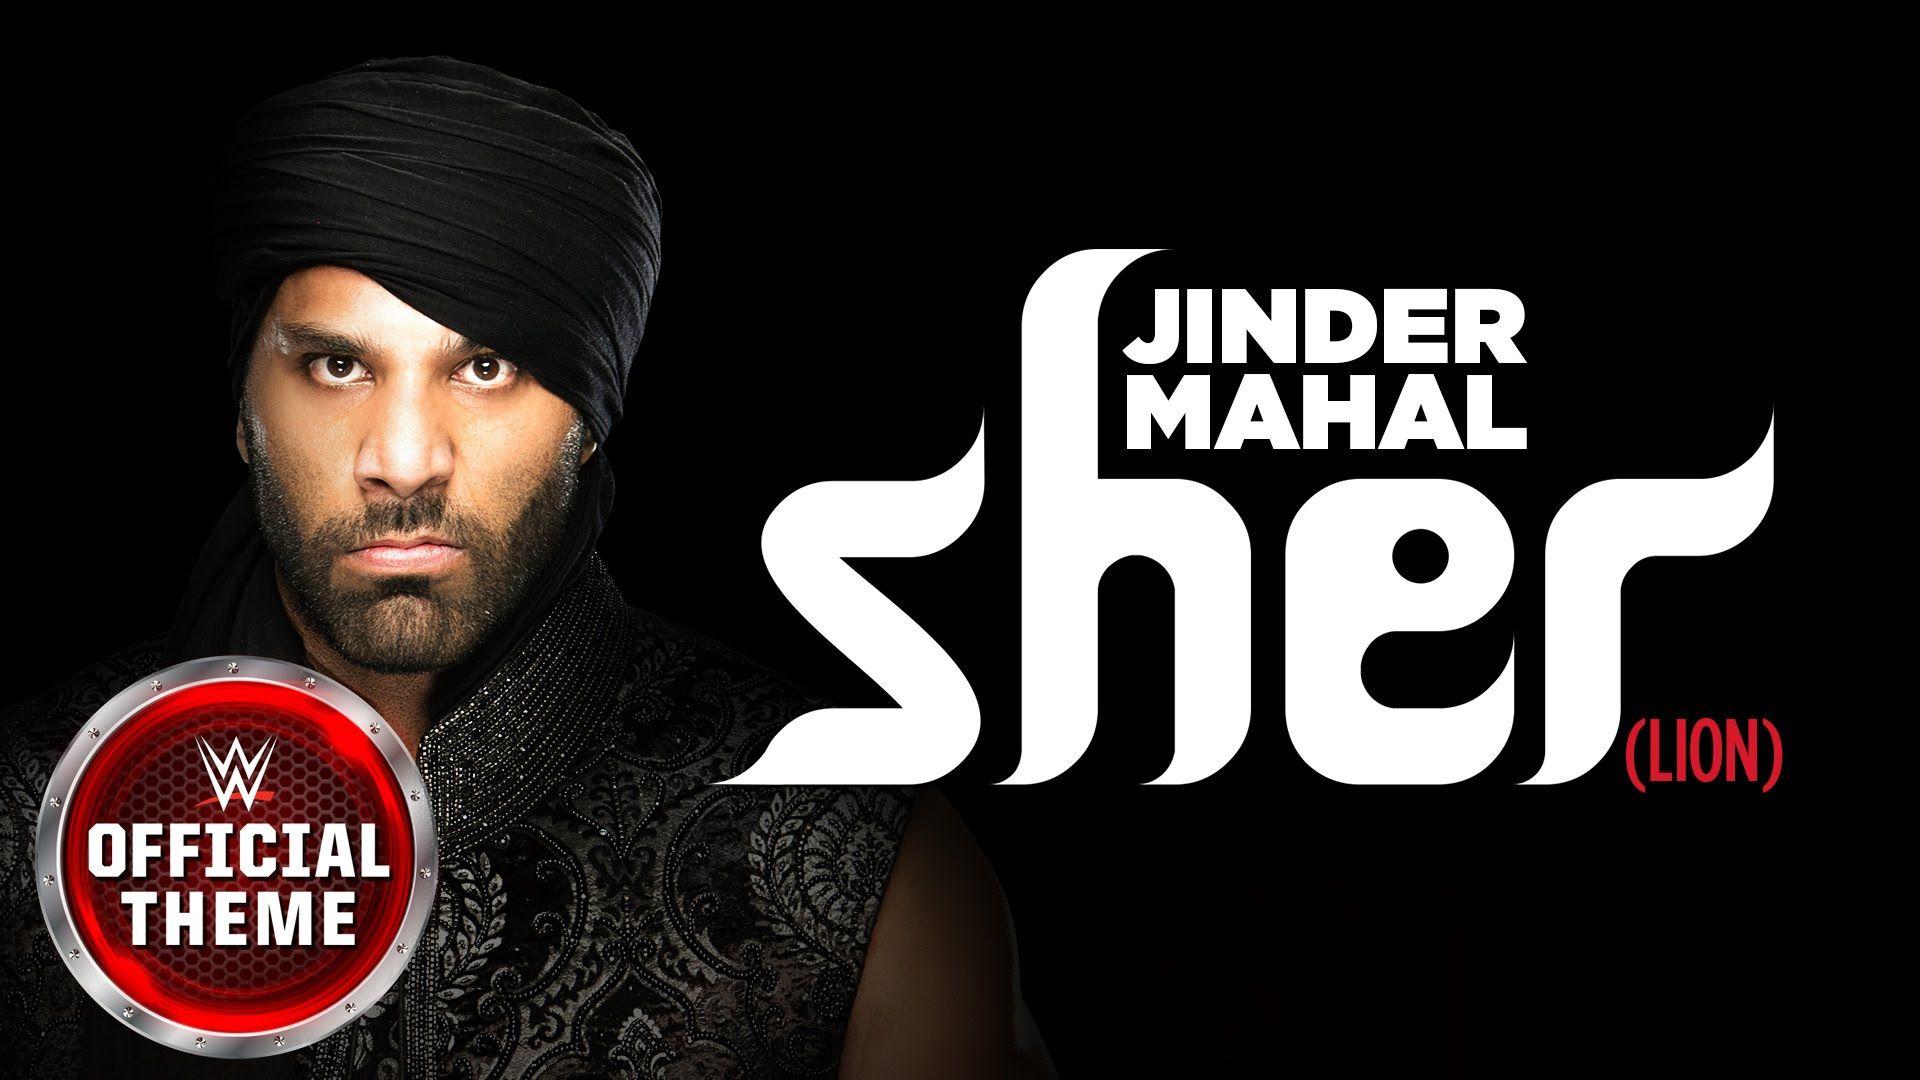 Jinder Mahal (Lion) (Official Theme)